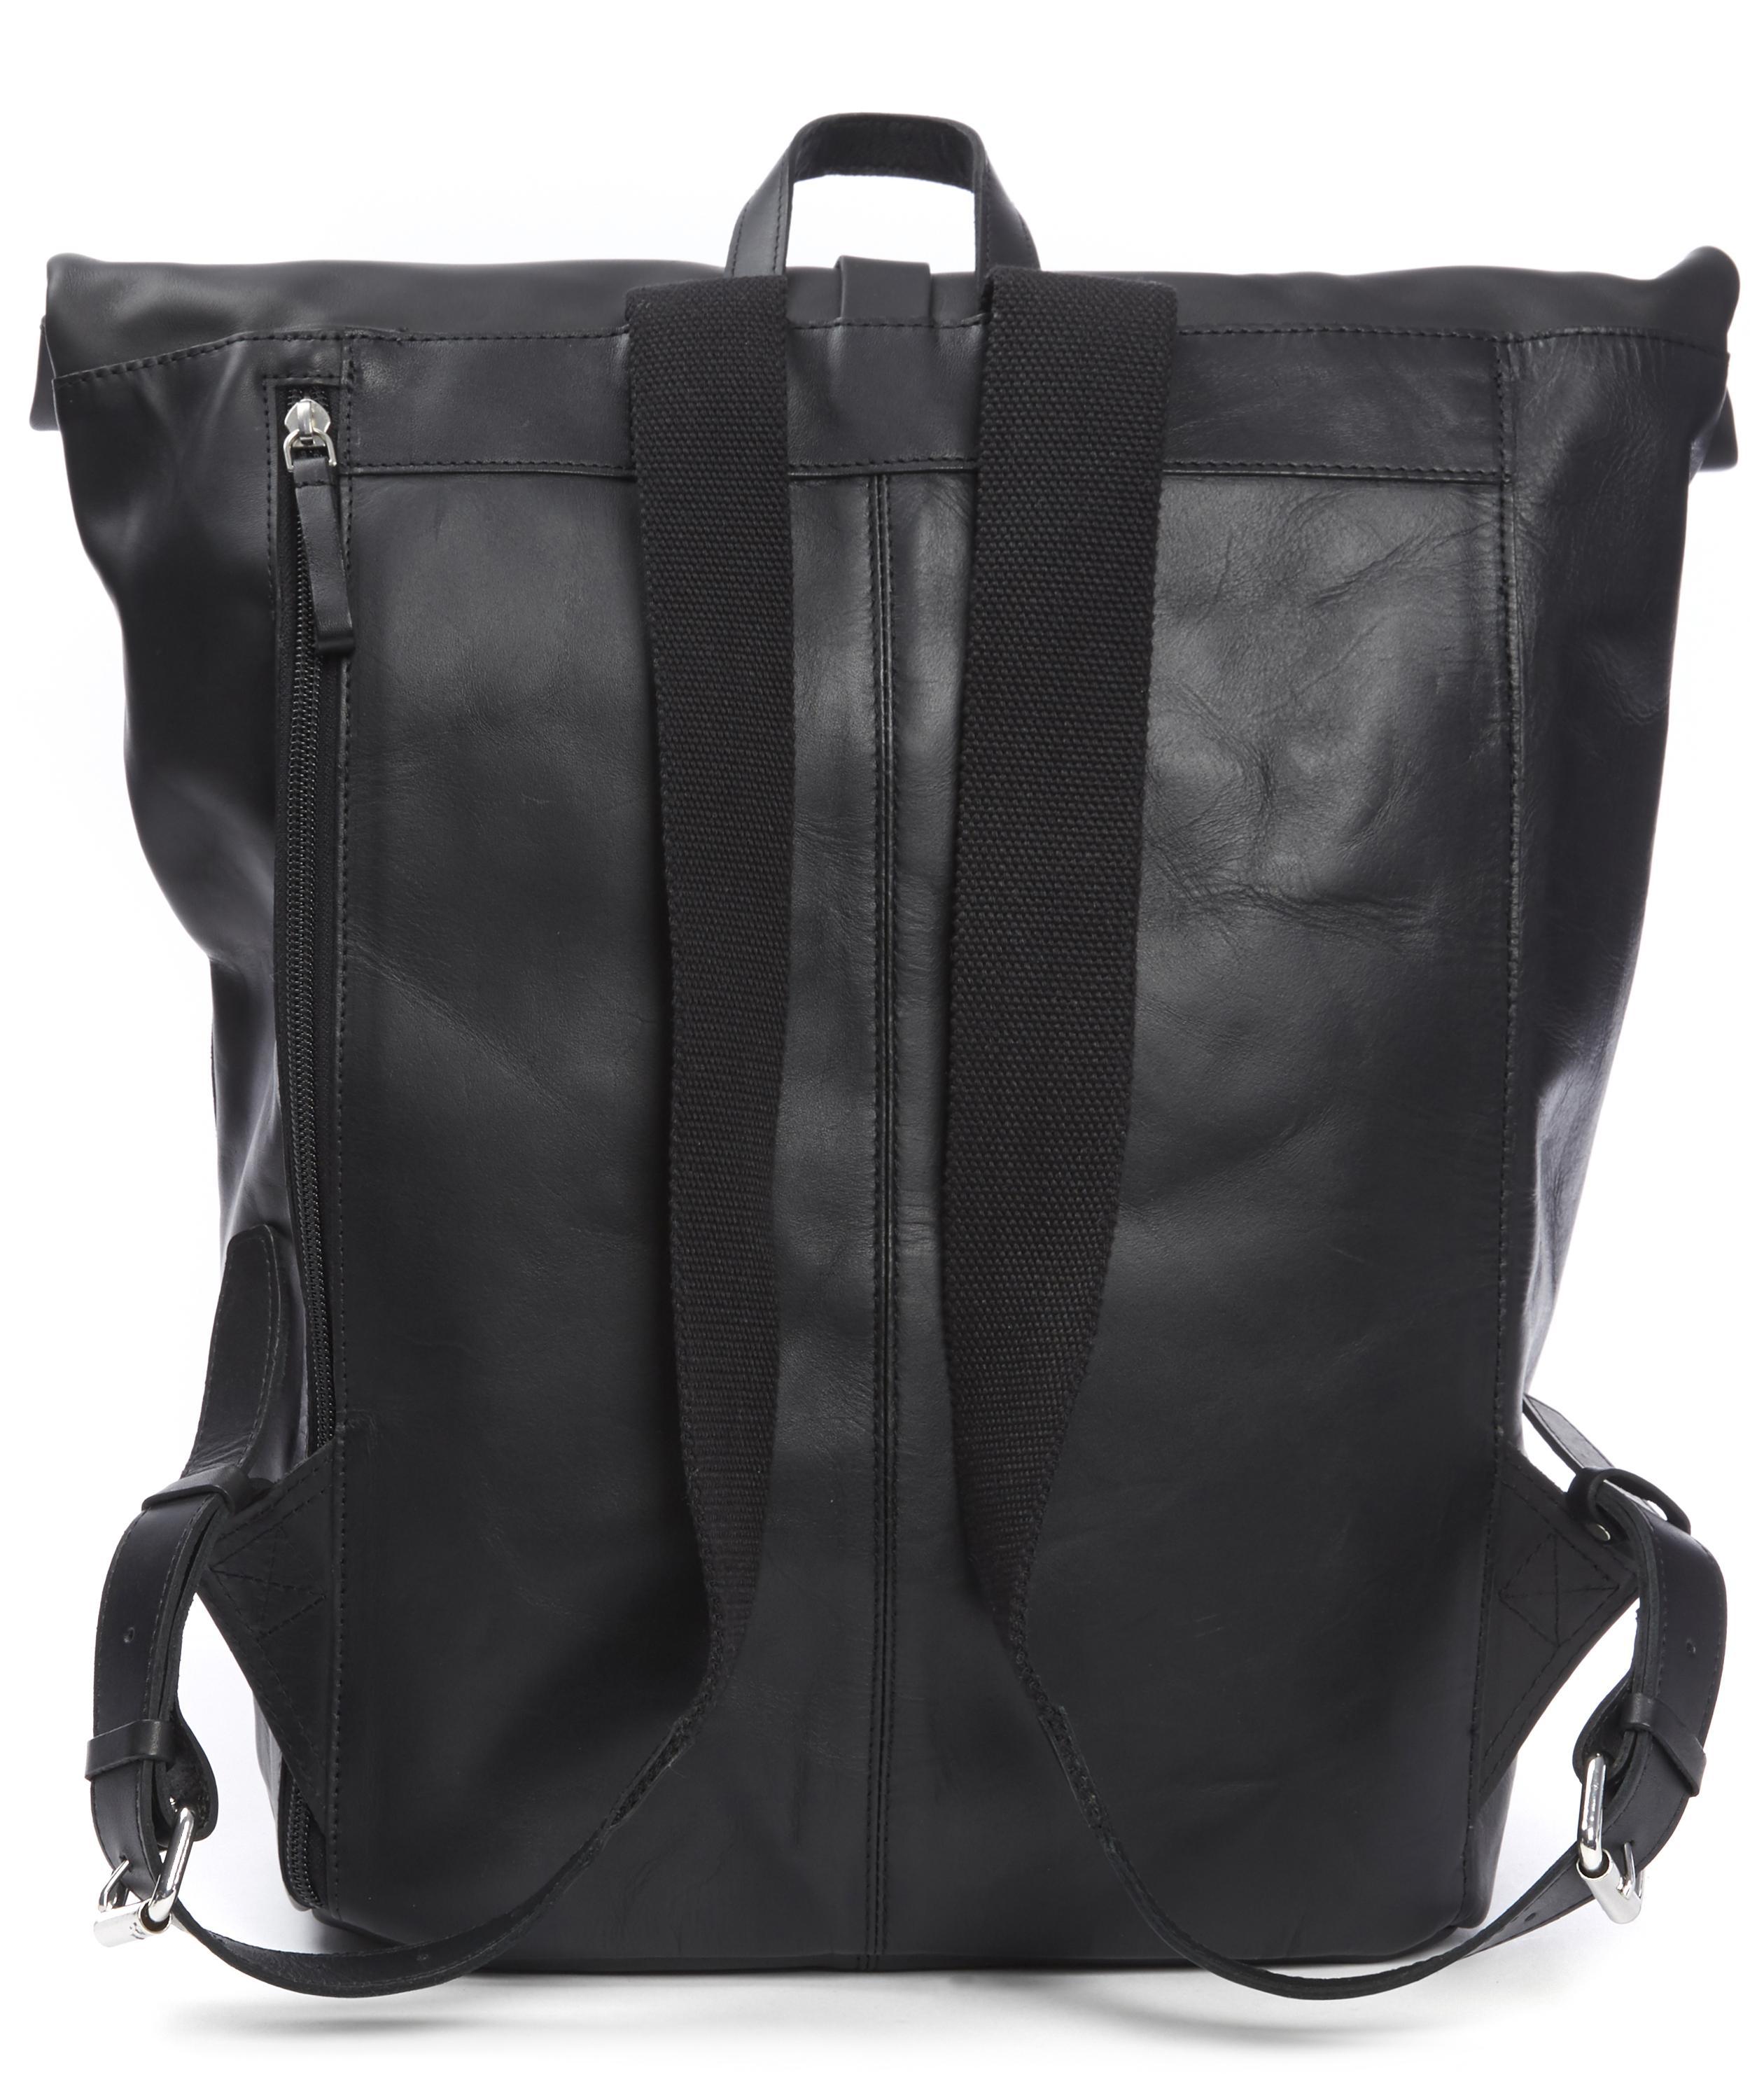 Sandqvist Antonia Leather Rolltop Backpack in Black for Men - Lyst